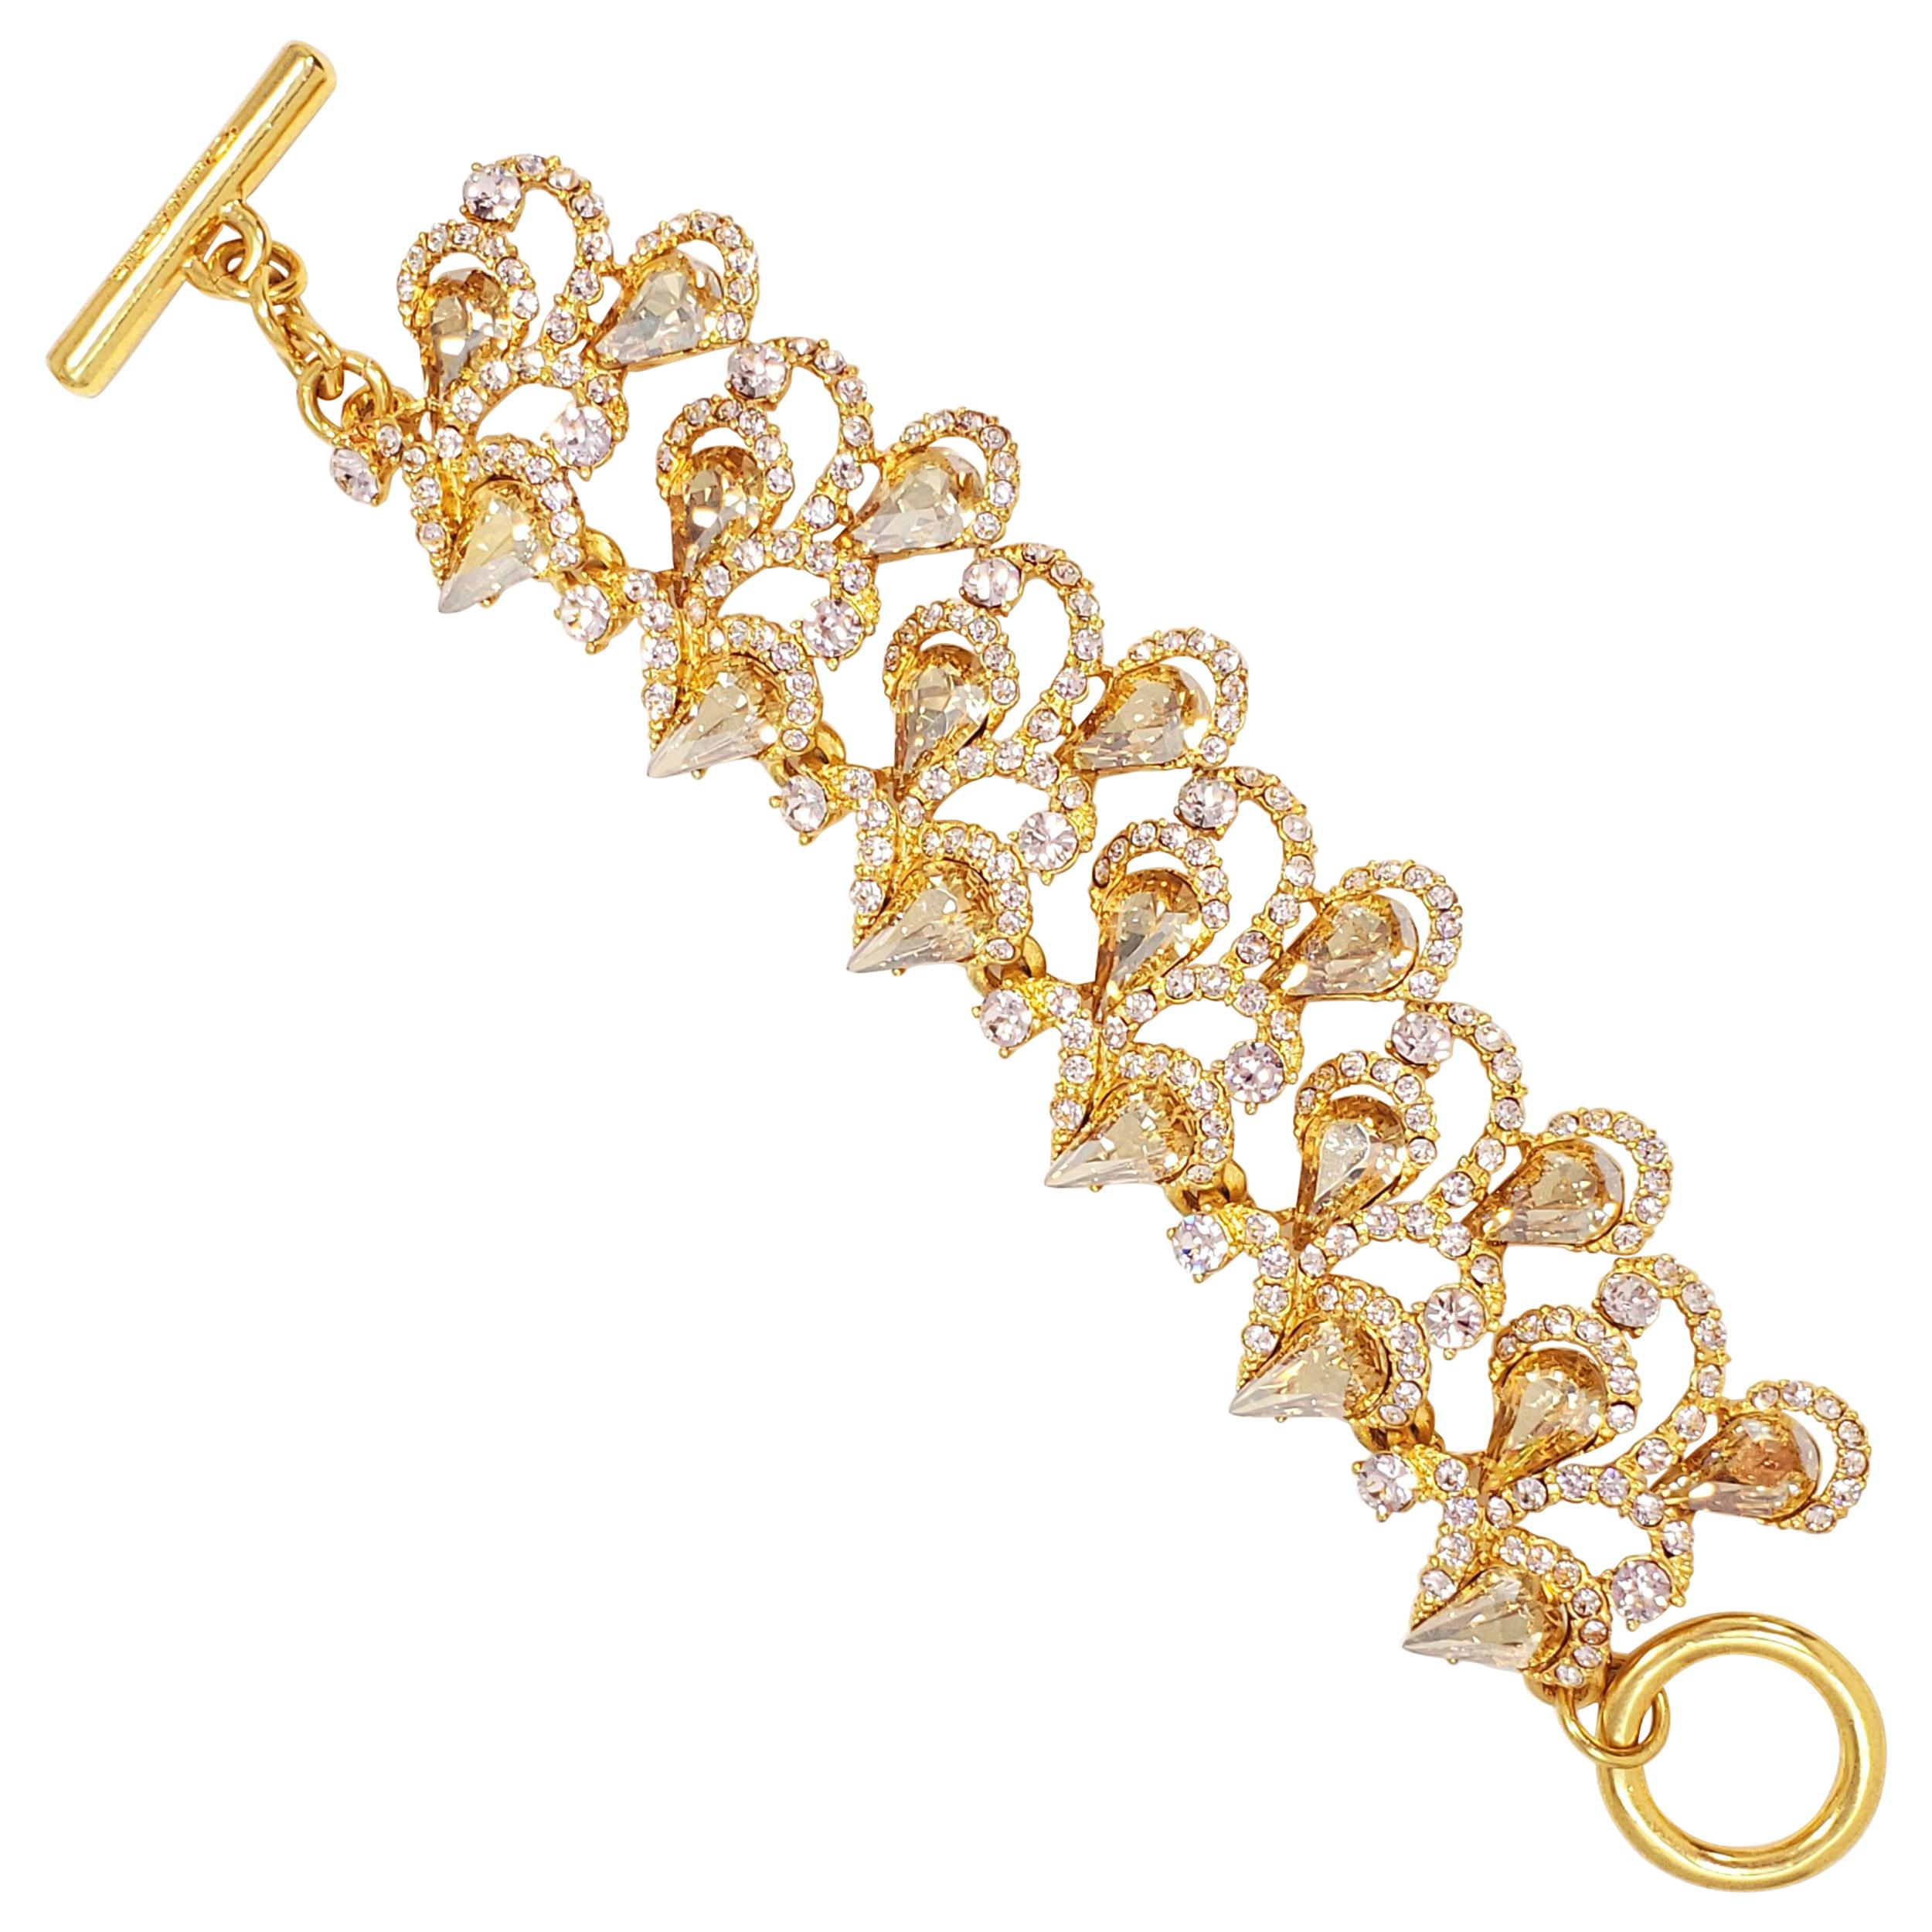 Oscar de la Renta Pear-cut Clear and Topaz Crystal Toggle Clasp Bracelet in Gold For Sale